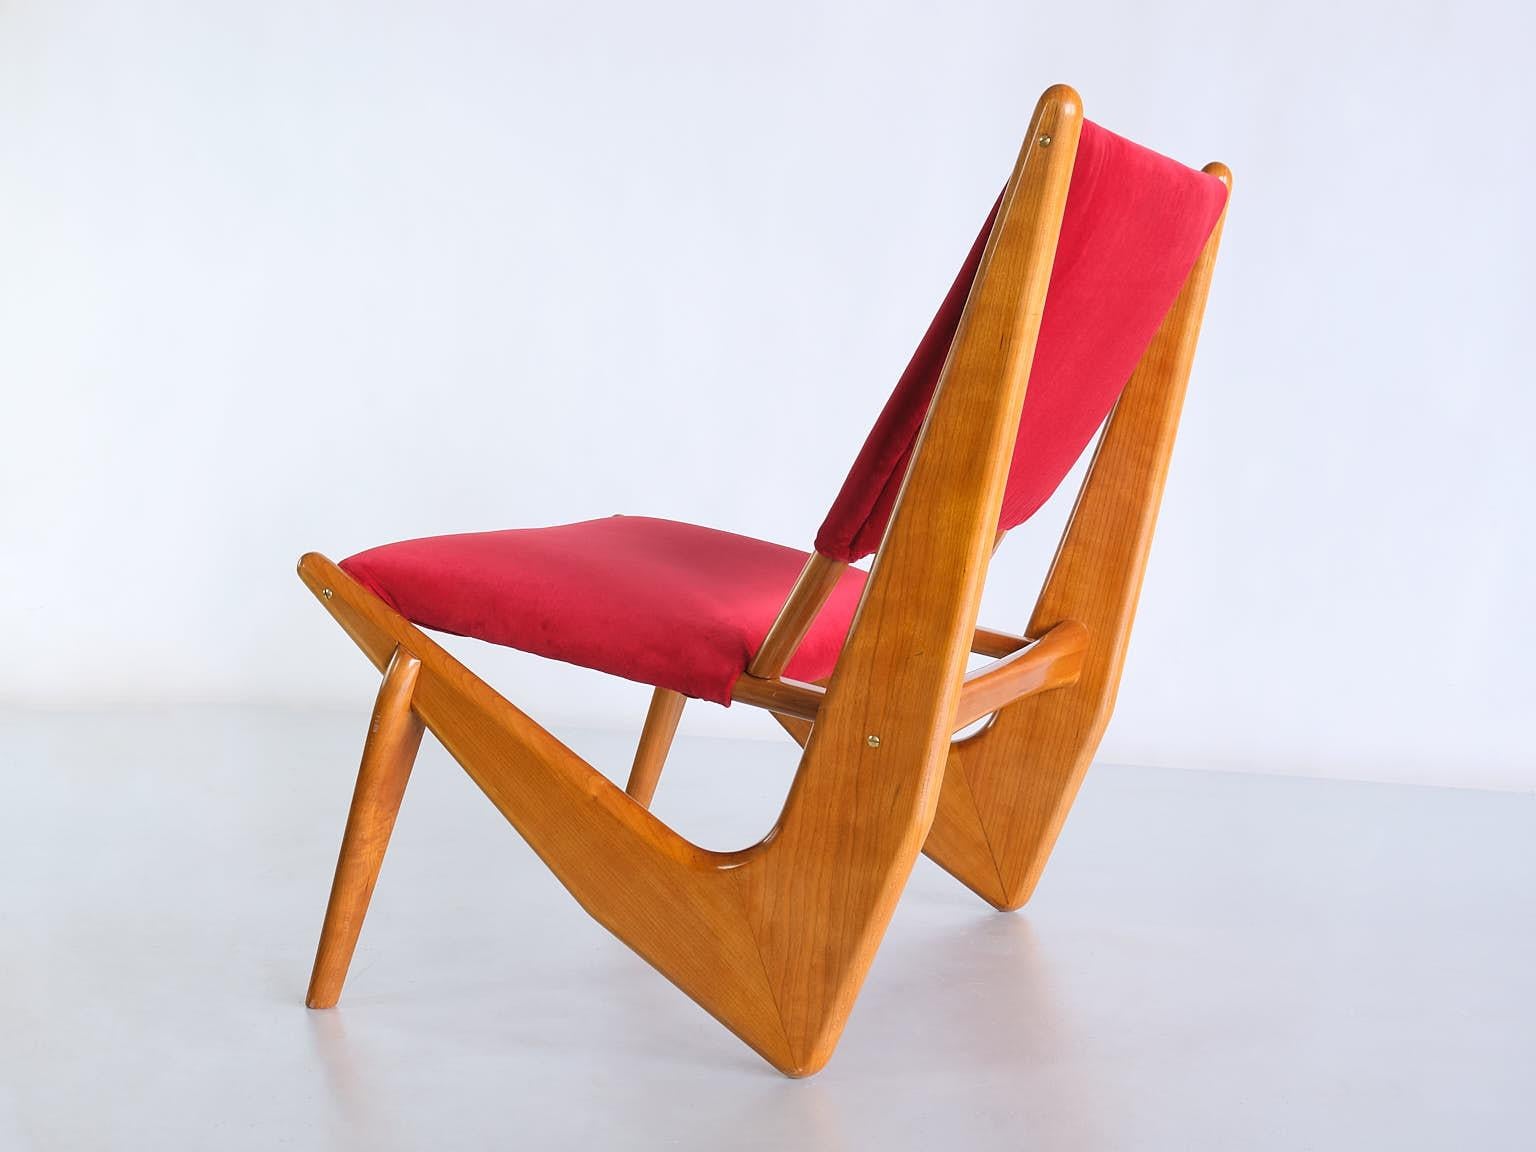 Bertil Behrman Lounge Chair in Oak and Velvet, Engen Möbelfabriker, Sweden, 1956 For Sale 1